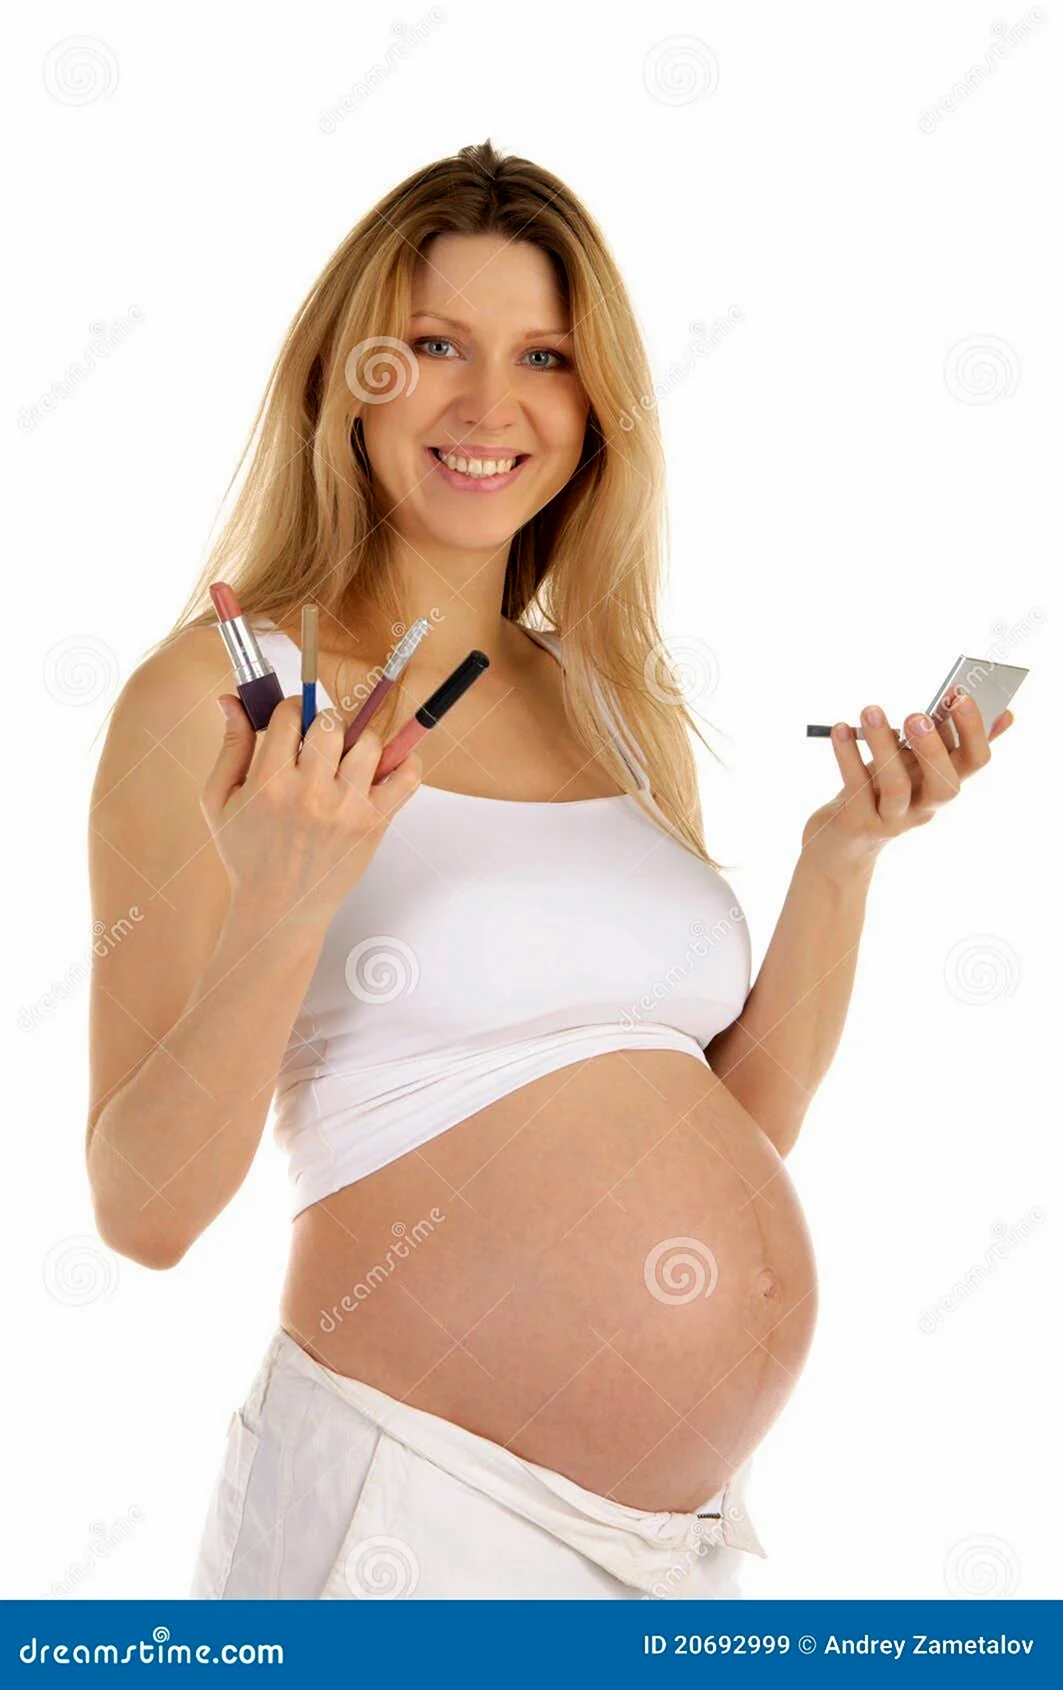 Беременная и косметика